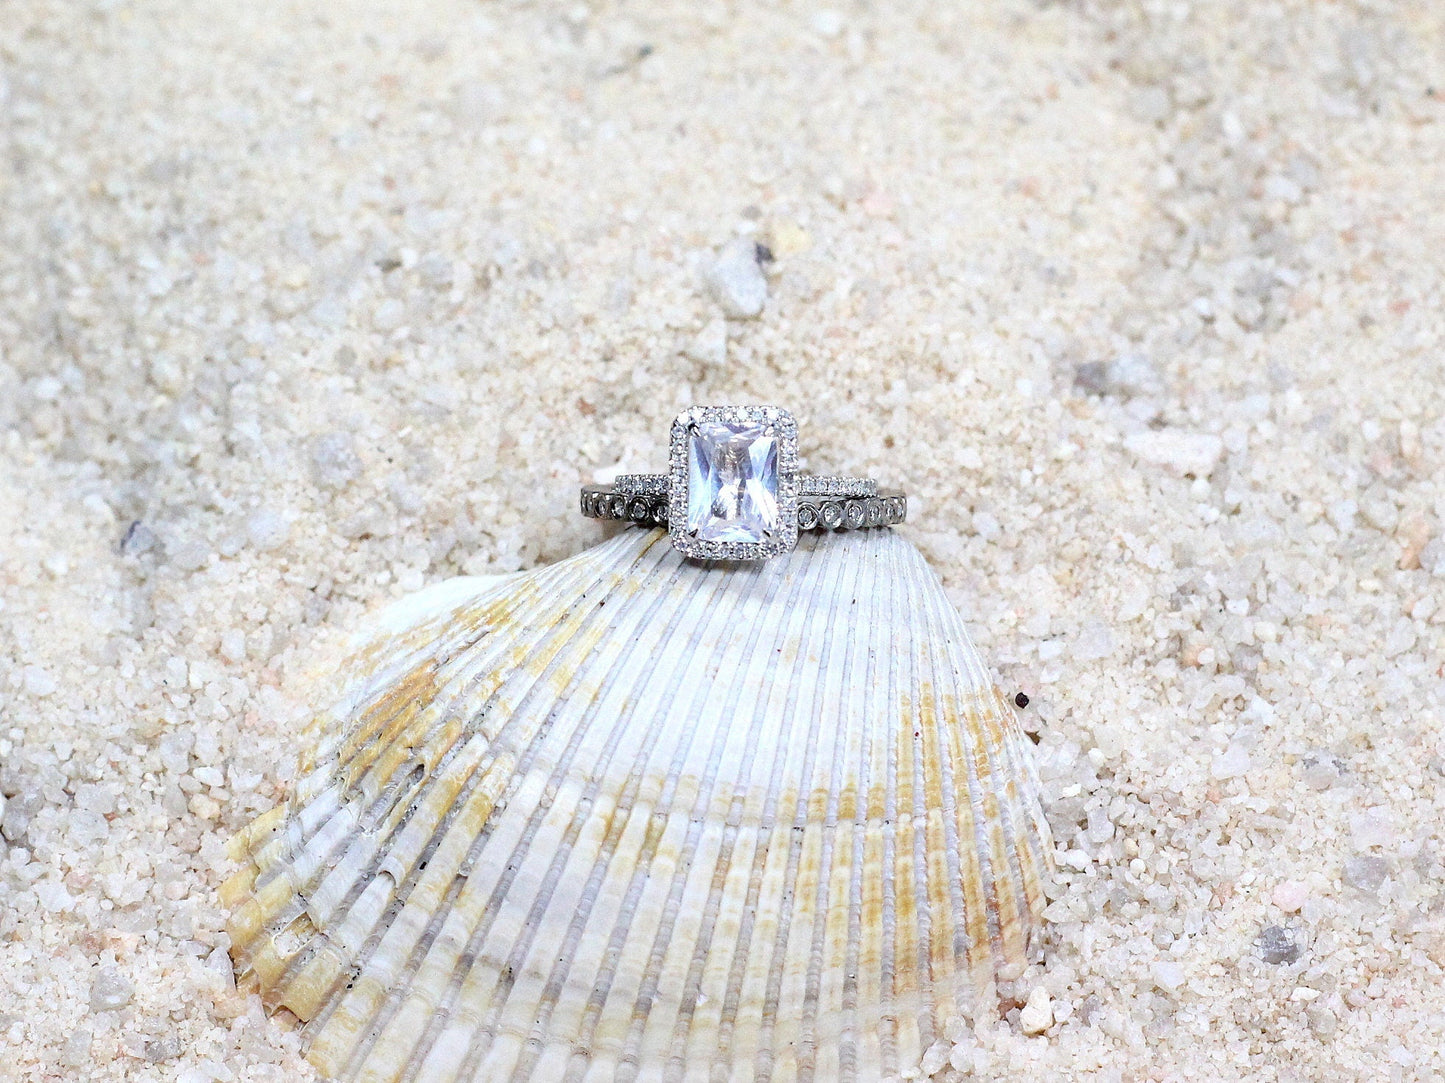 2ct Ione Ferarelle 8x6mm White Sapphire & Diamond Eternity Bezel Wedding Set Rings BellaMoreDesign.com